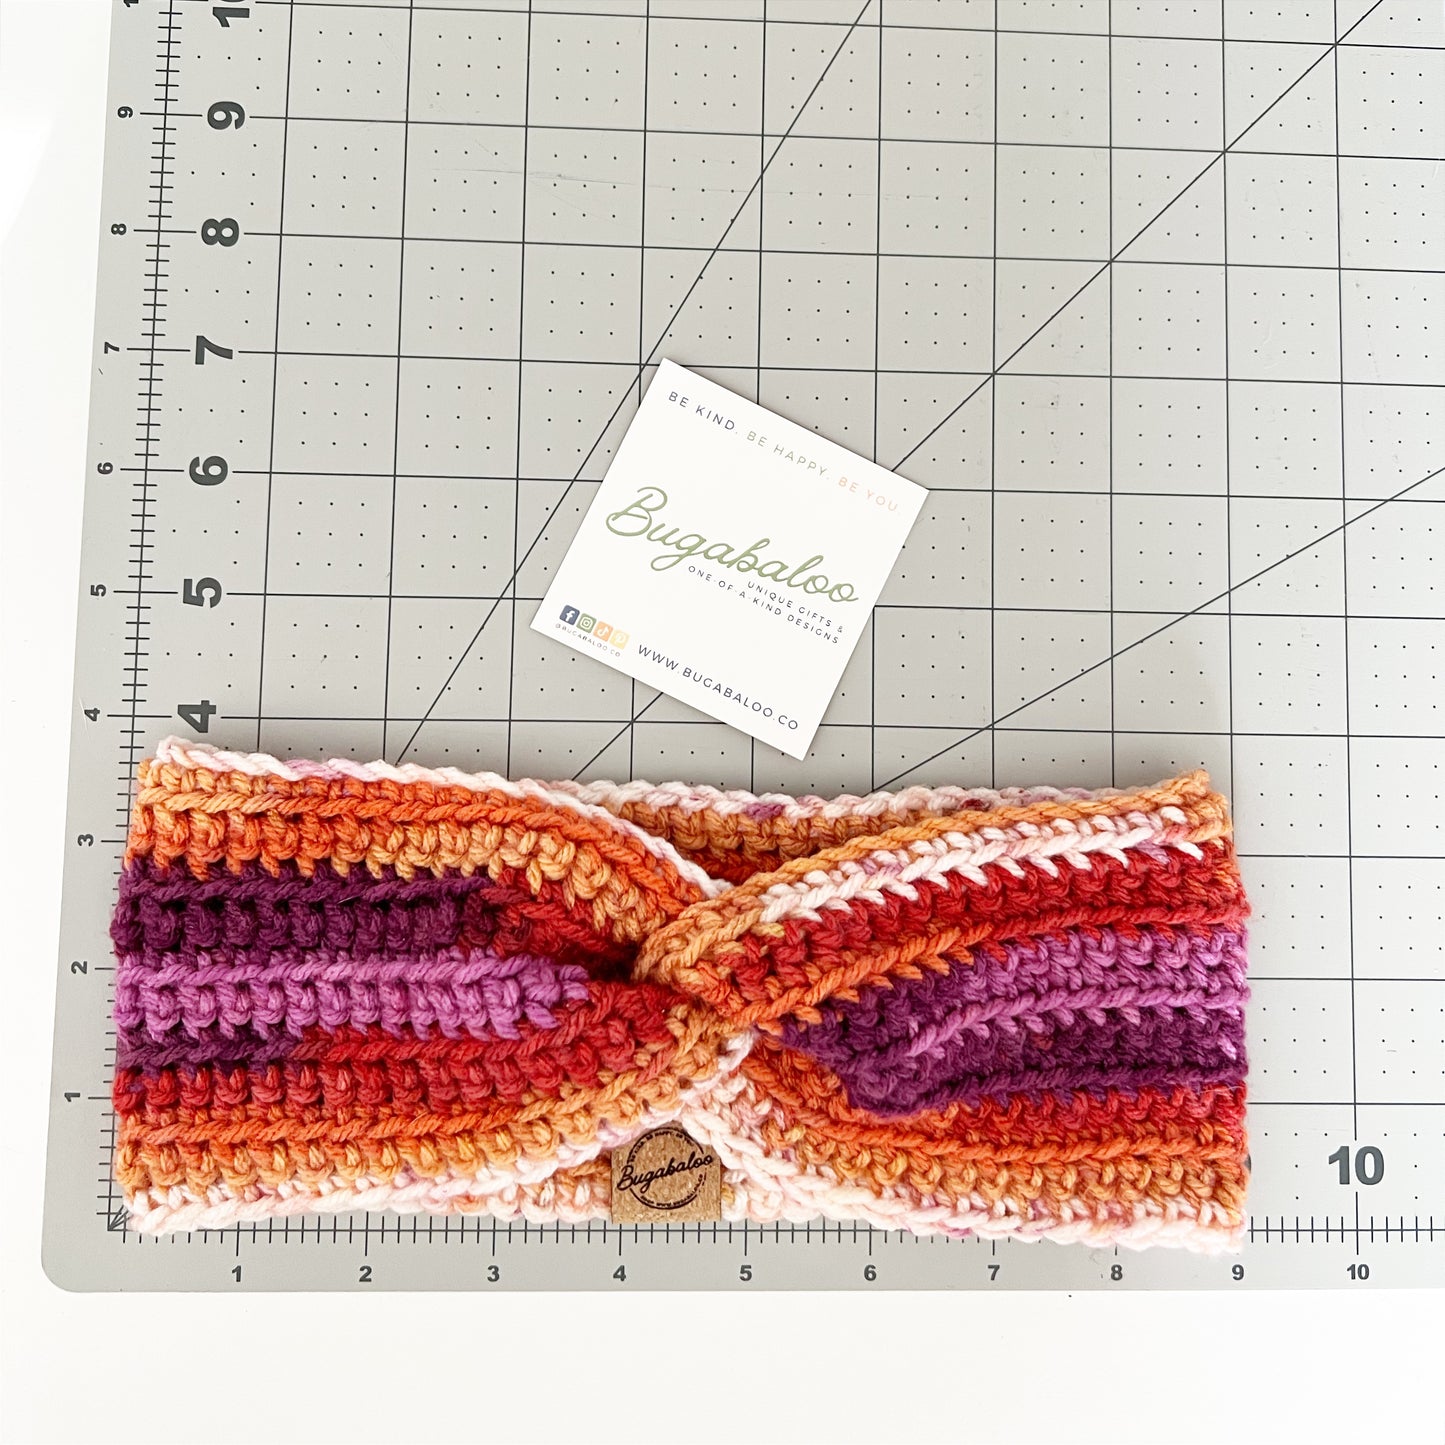 Fall Spirit Orange and Purple Crochet Knit Winter Twisted Headband Ear Warmer